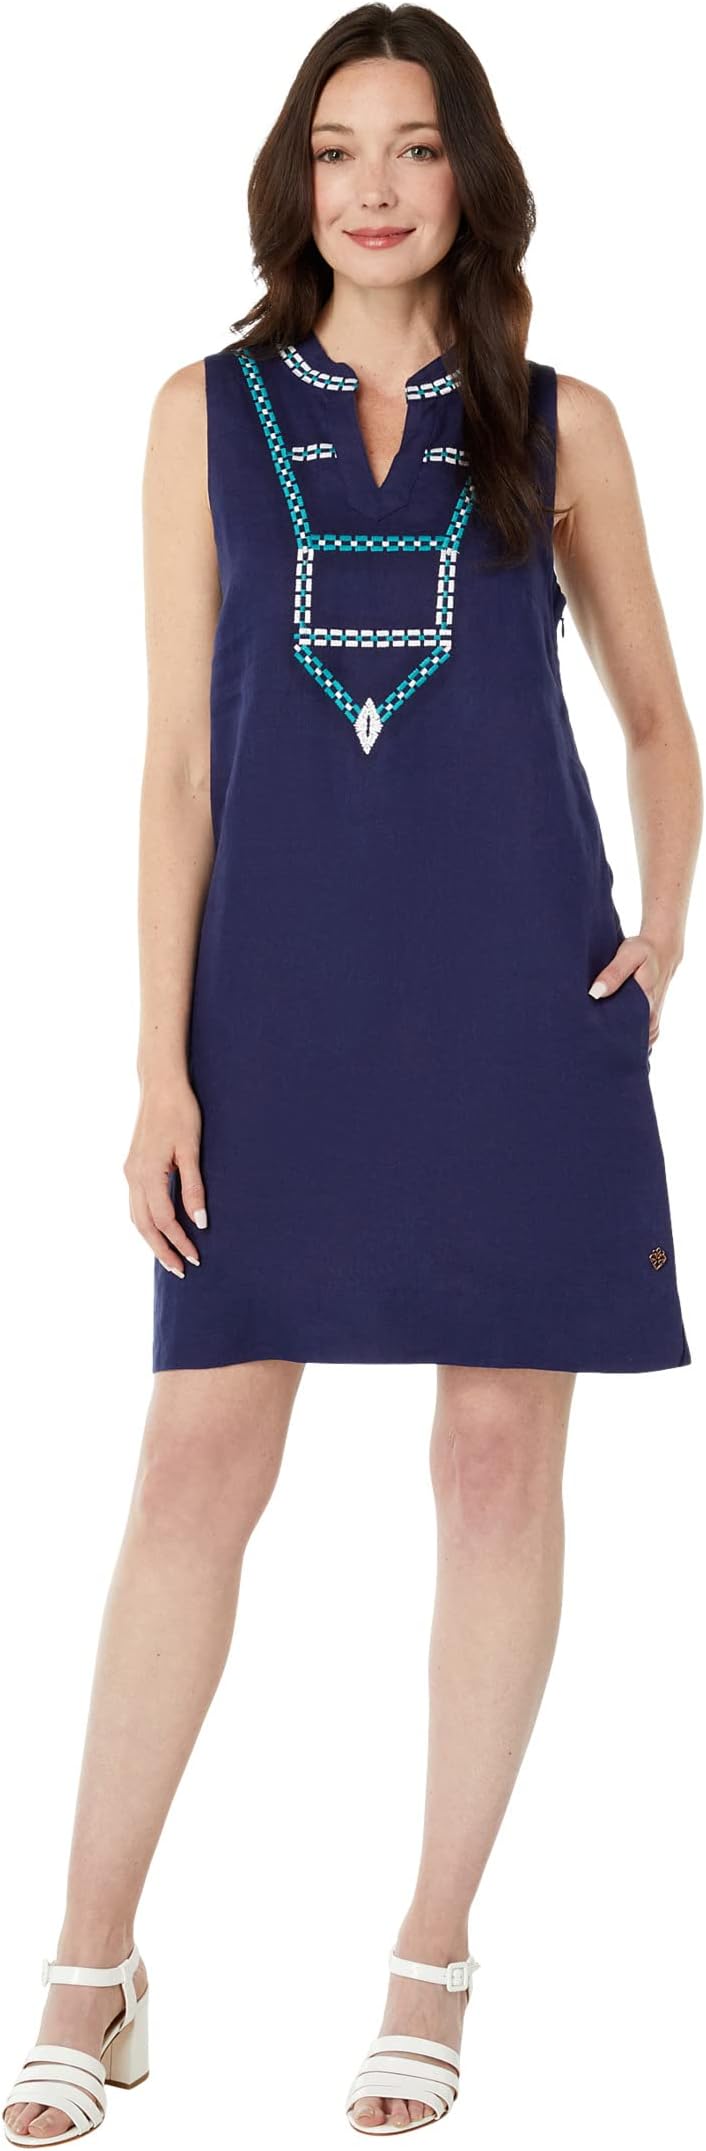 Платье Shift Marin - Синий Патриот Hatley, цвет Patriot Blue цена и фото